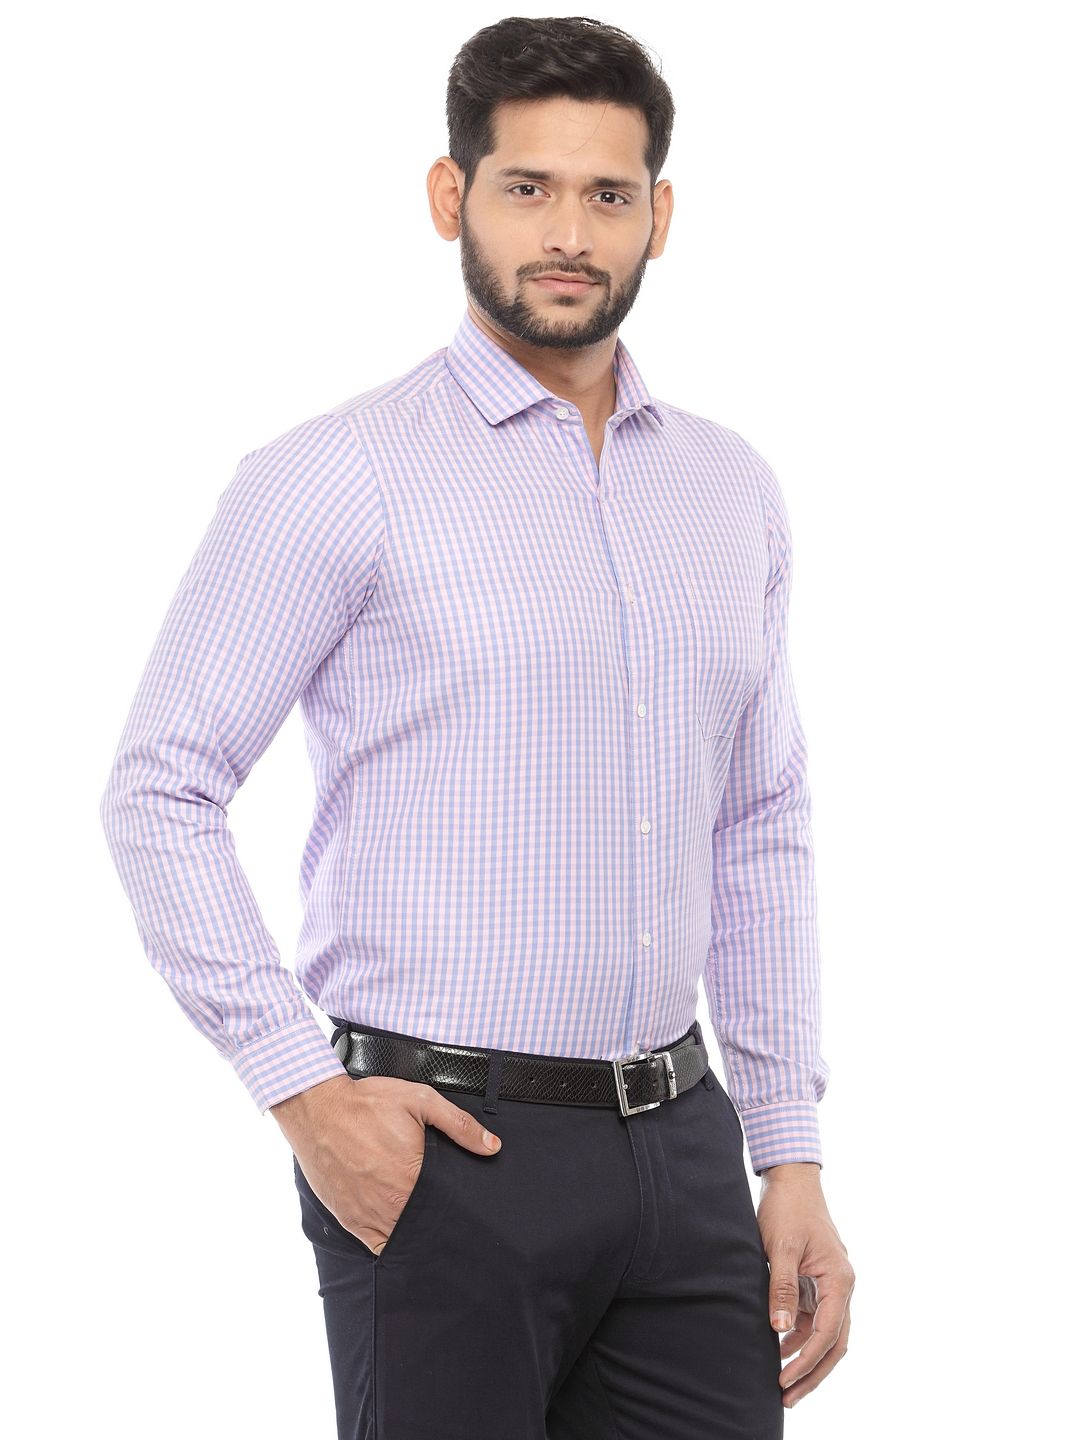 Sanskar Menswear Formal Shirt Pink Blue